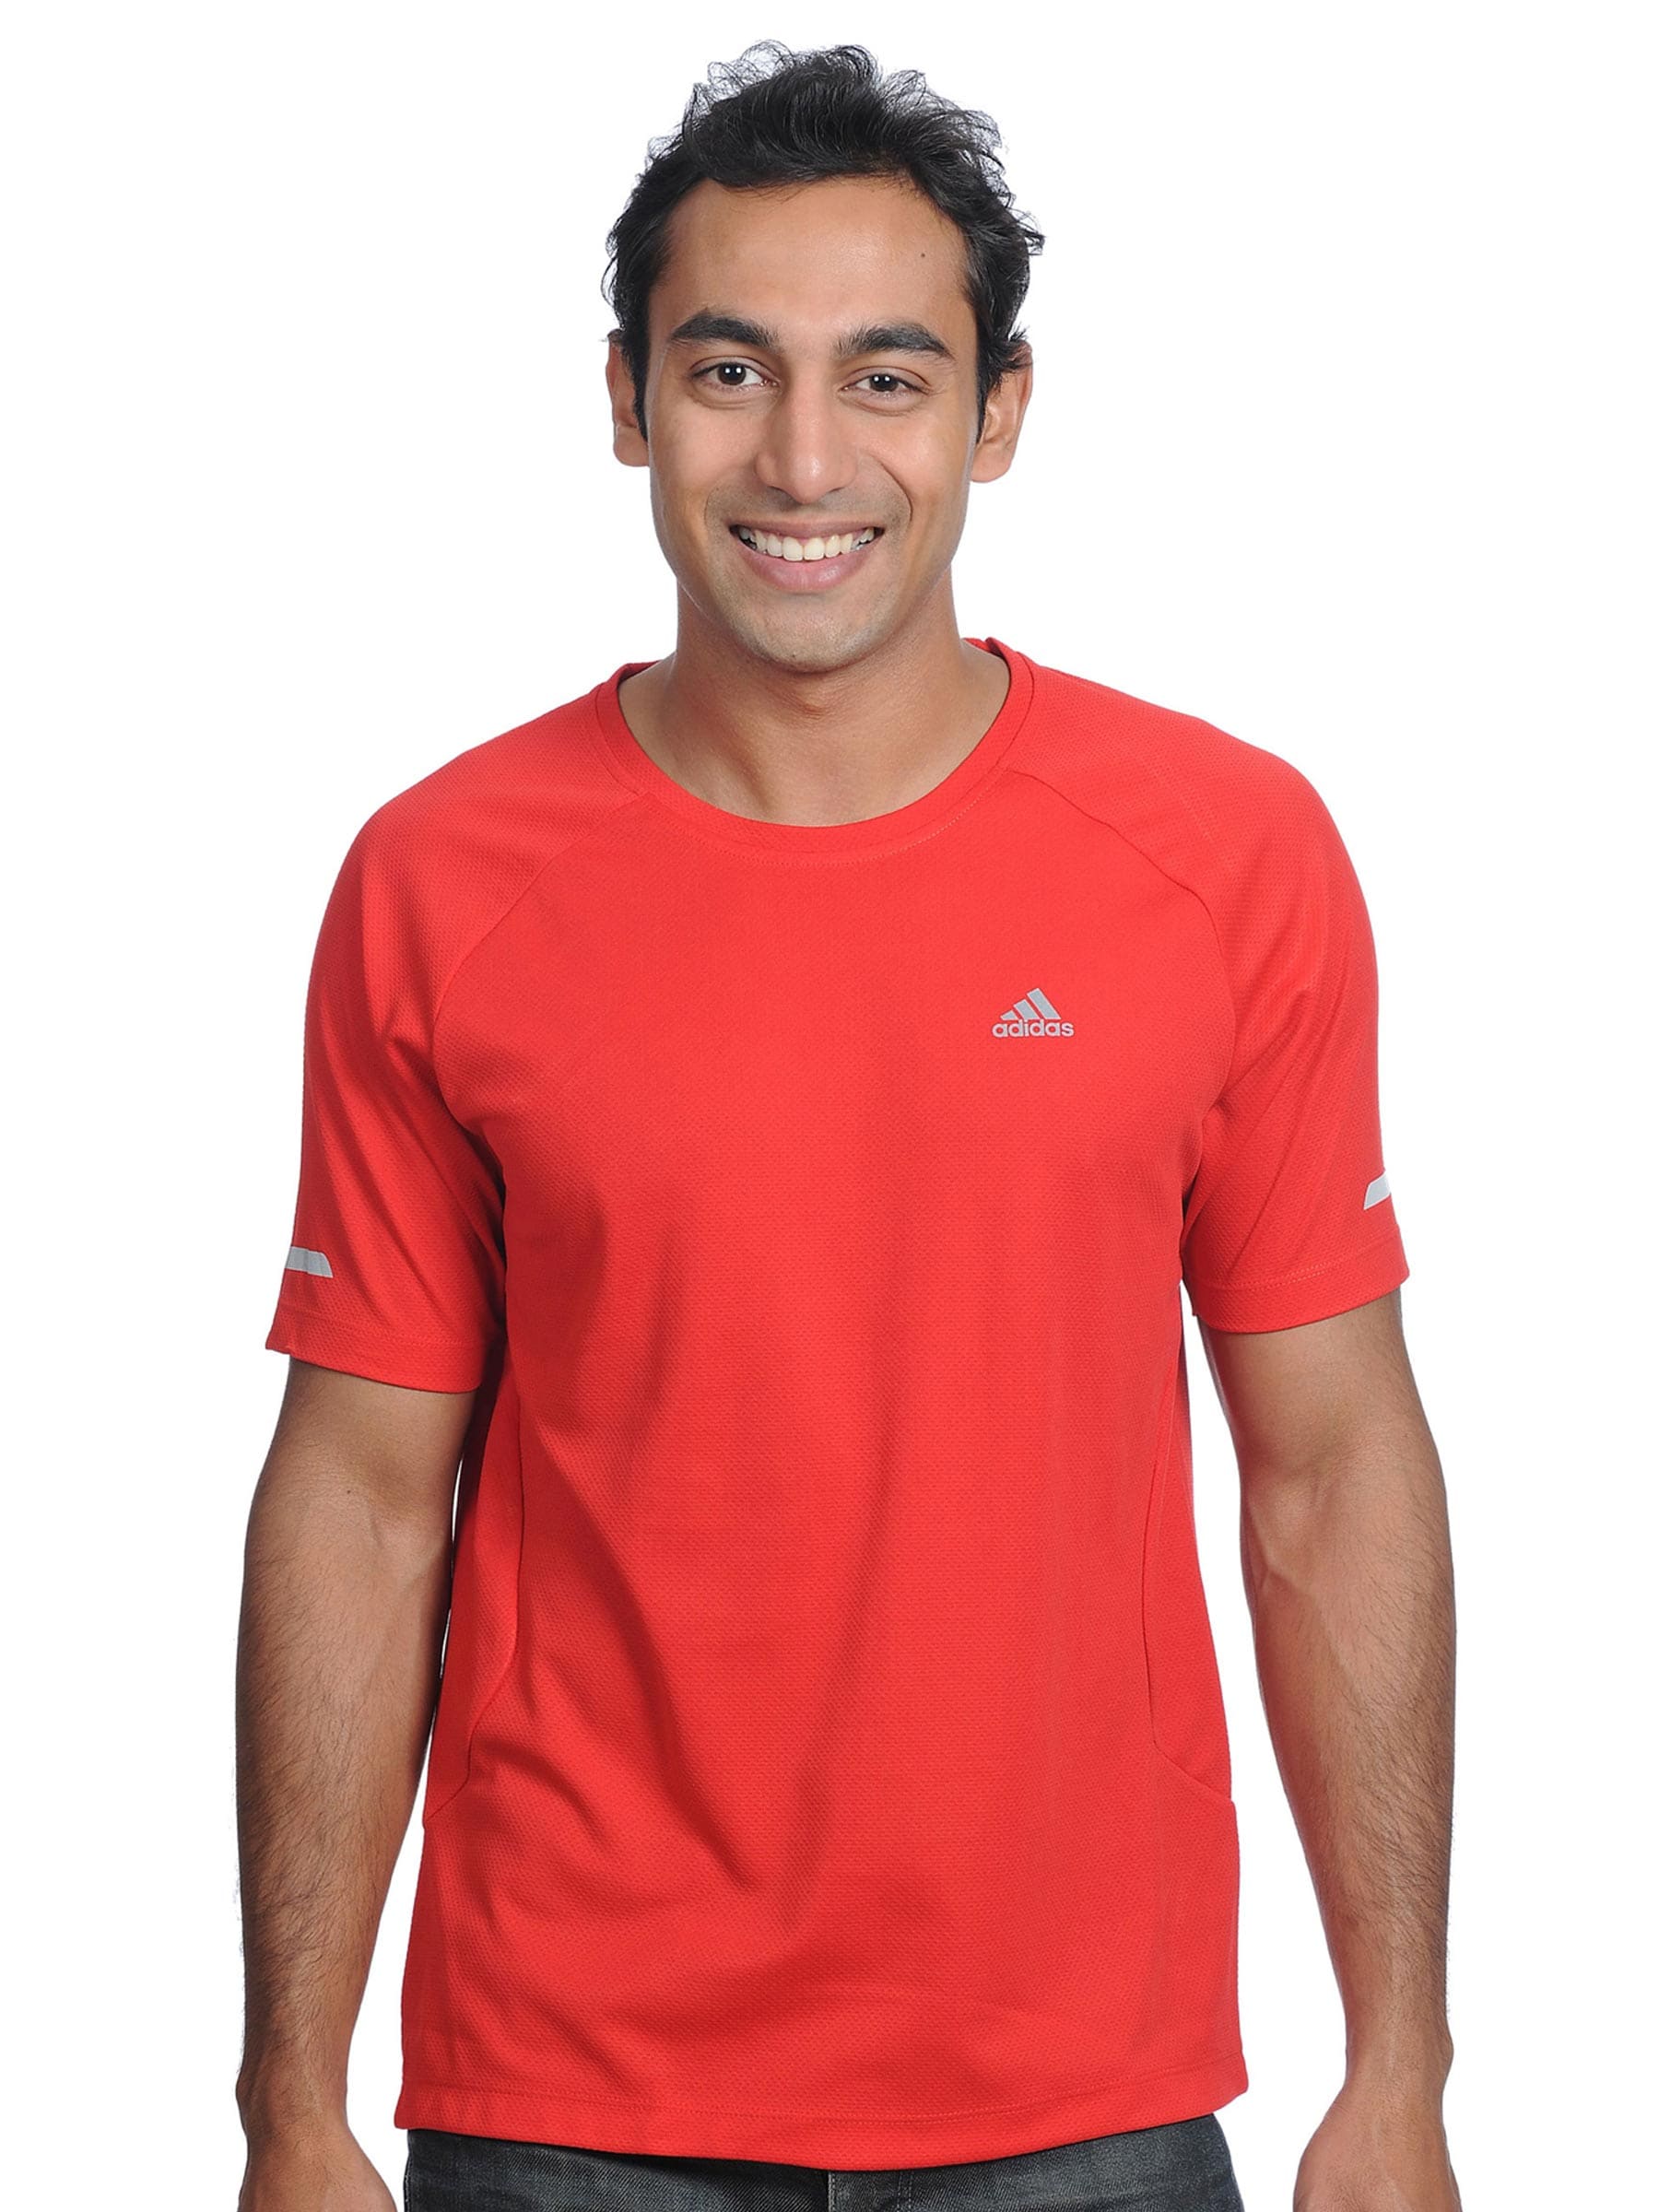 ADIDAS Mens Red T-shirt